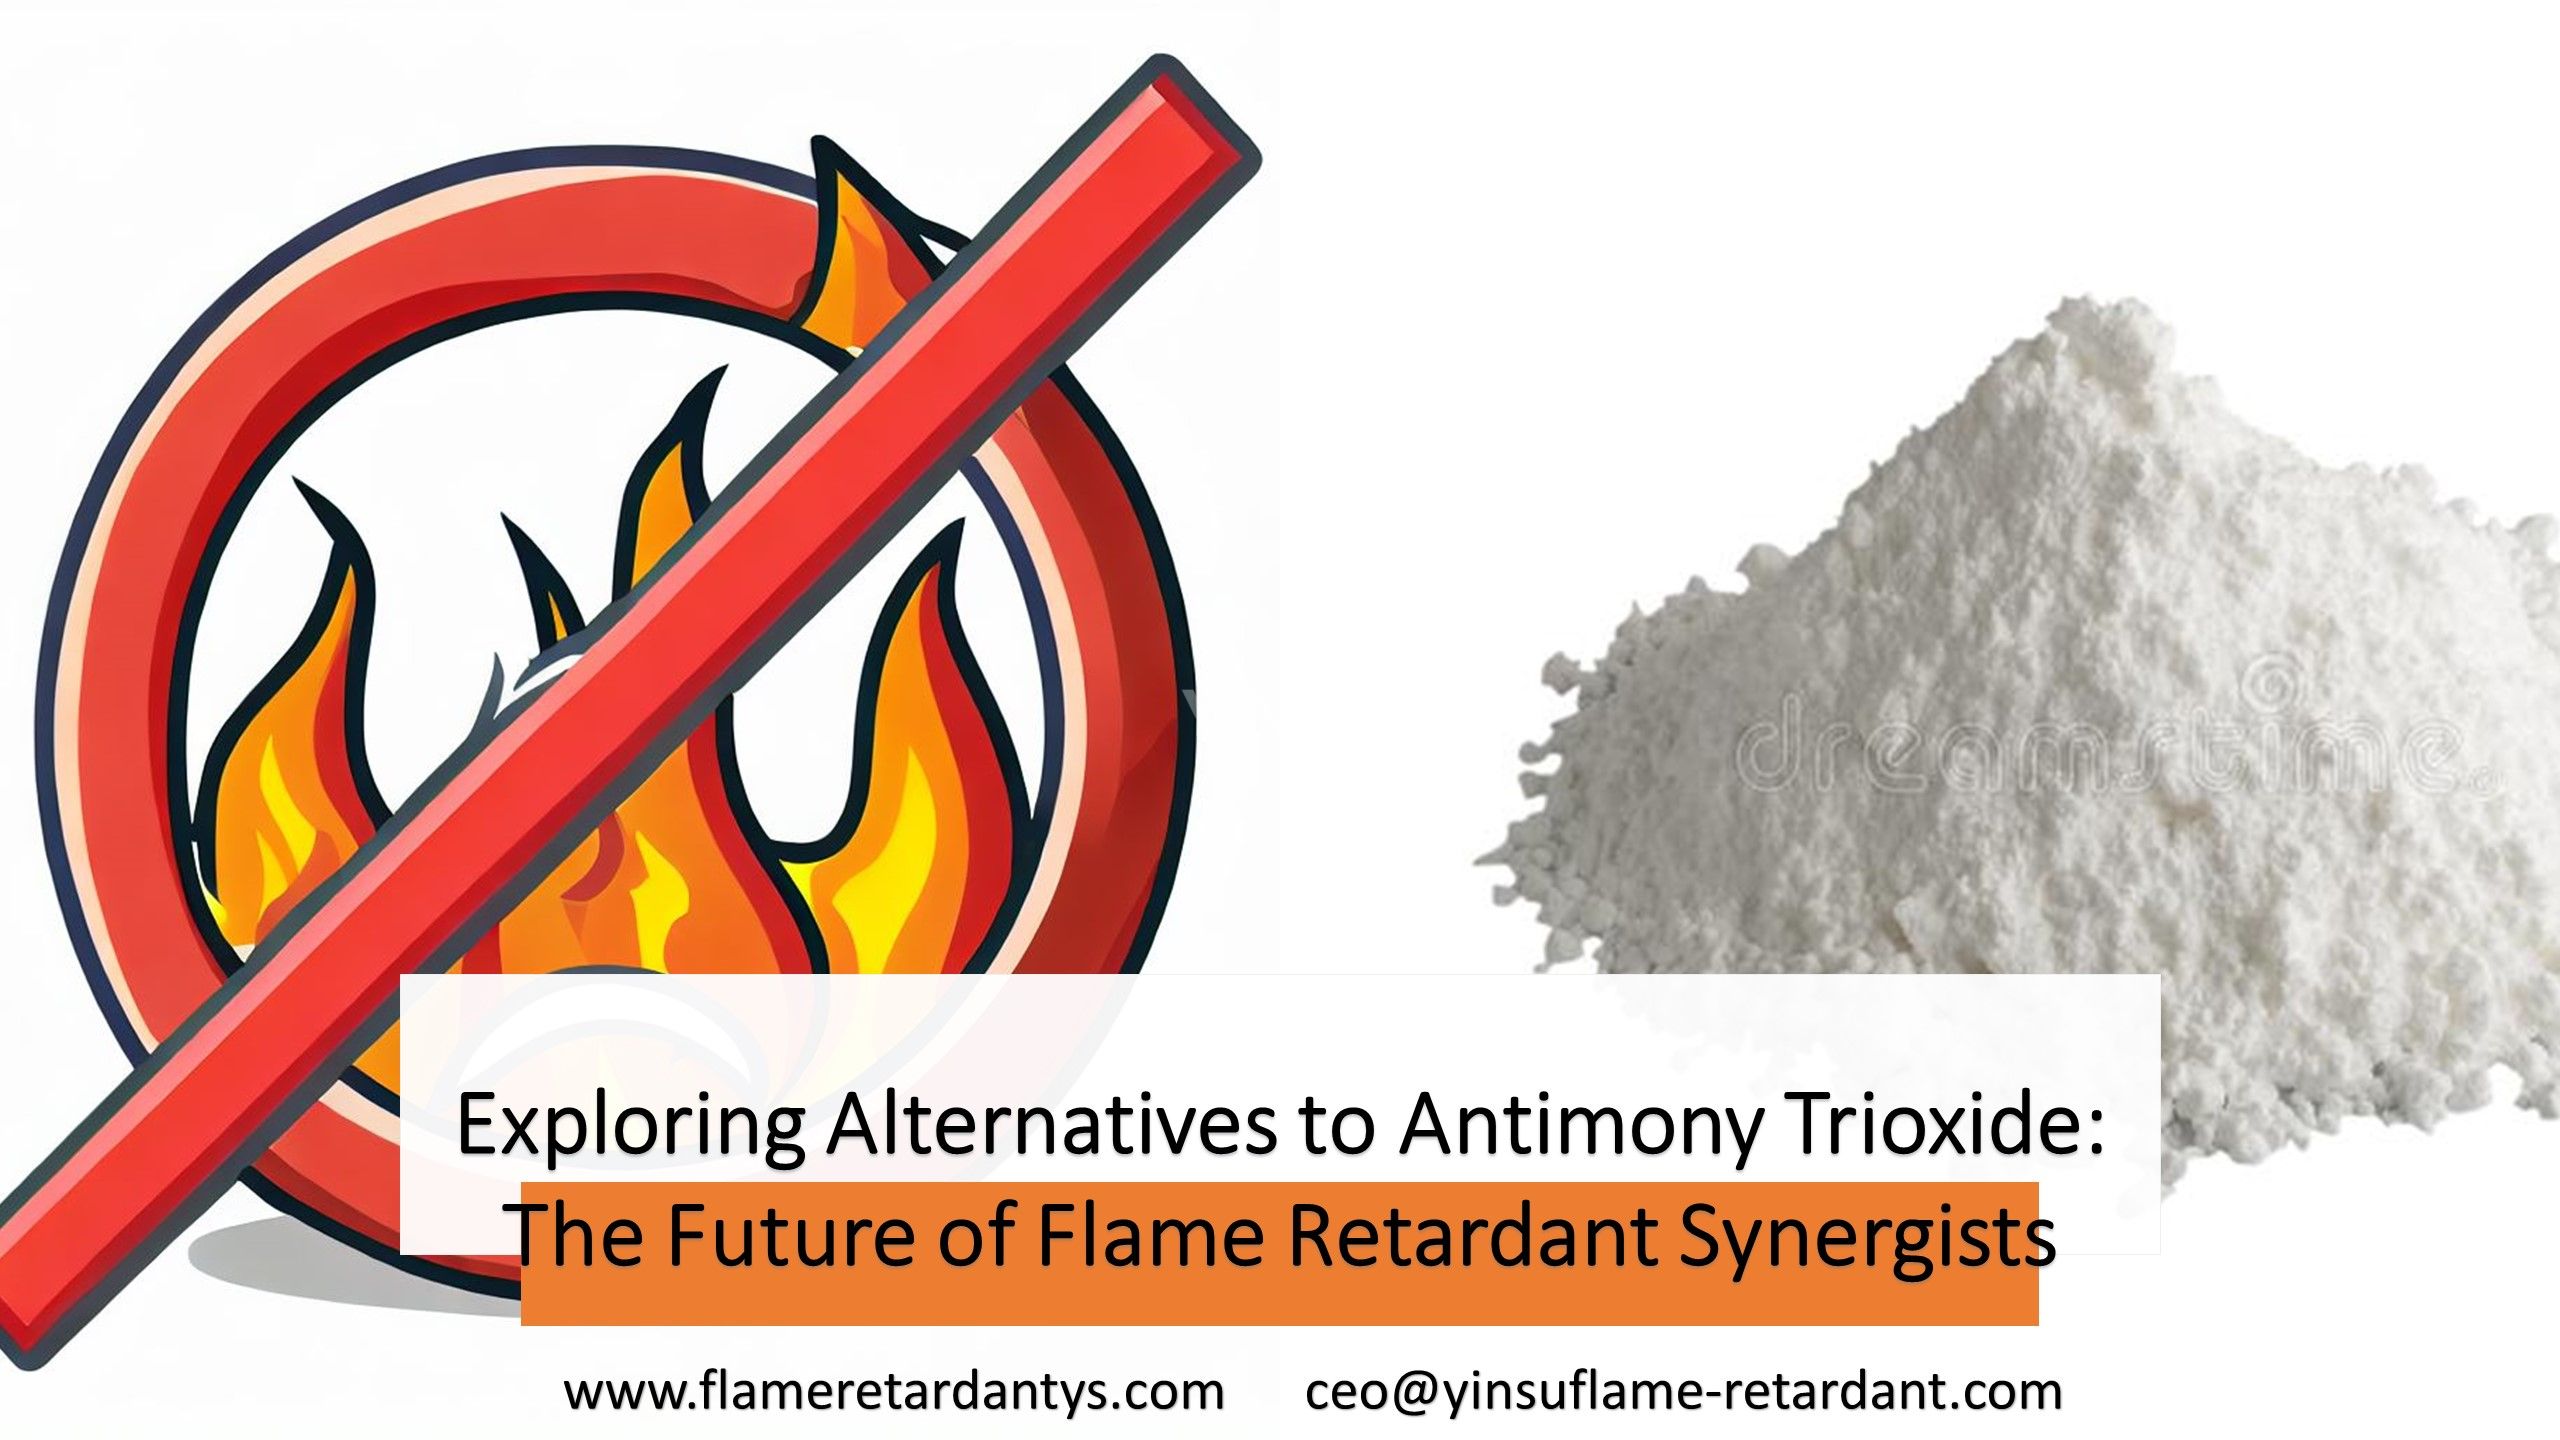 Explorando alternativas al trióxido de antimonio: el futuro de los sinergistas retardantes de llama